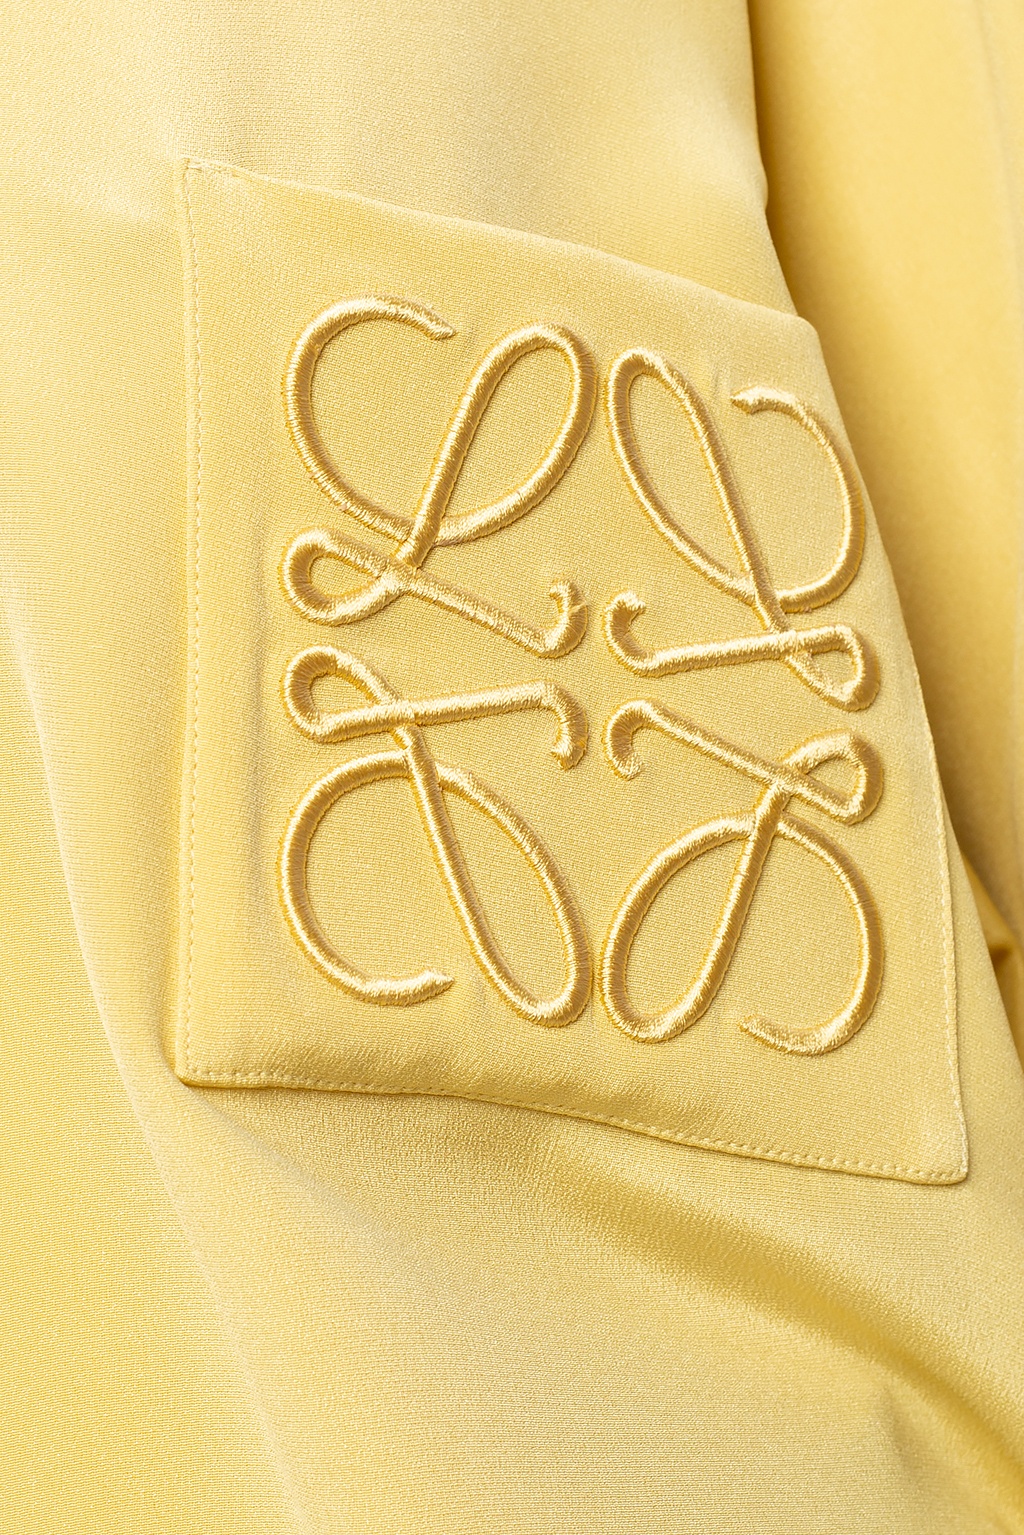 Louis Vuitton Military Silk Shirt Anthracite. Size Xs